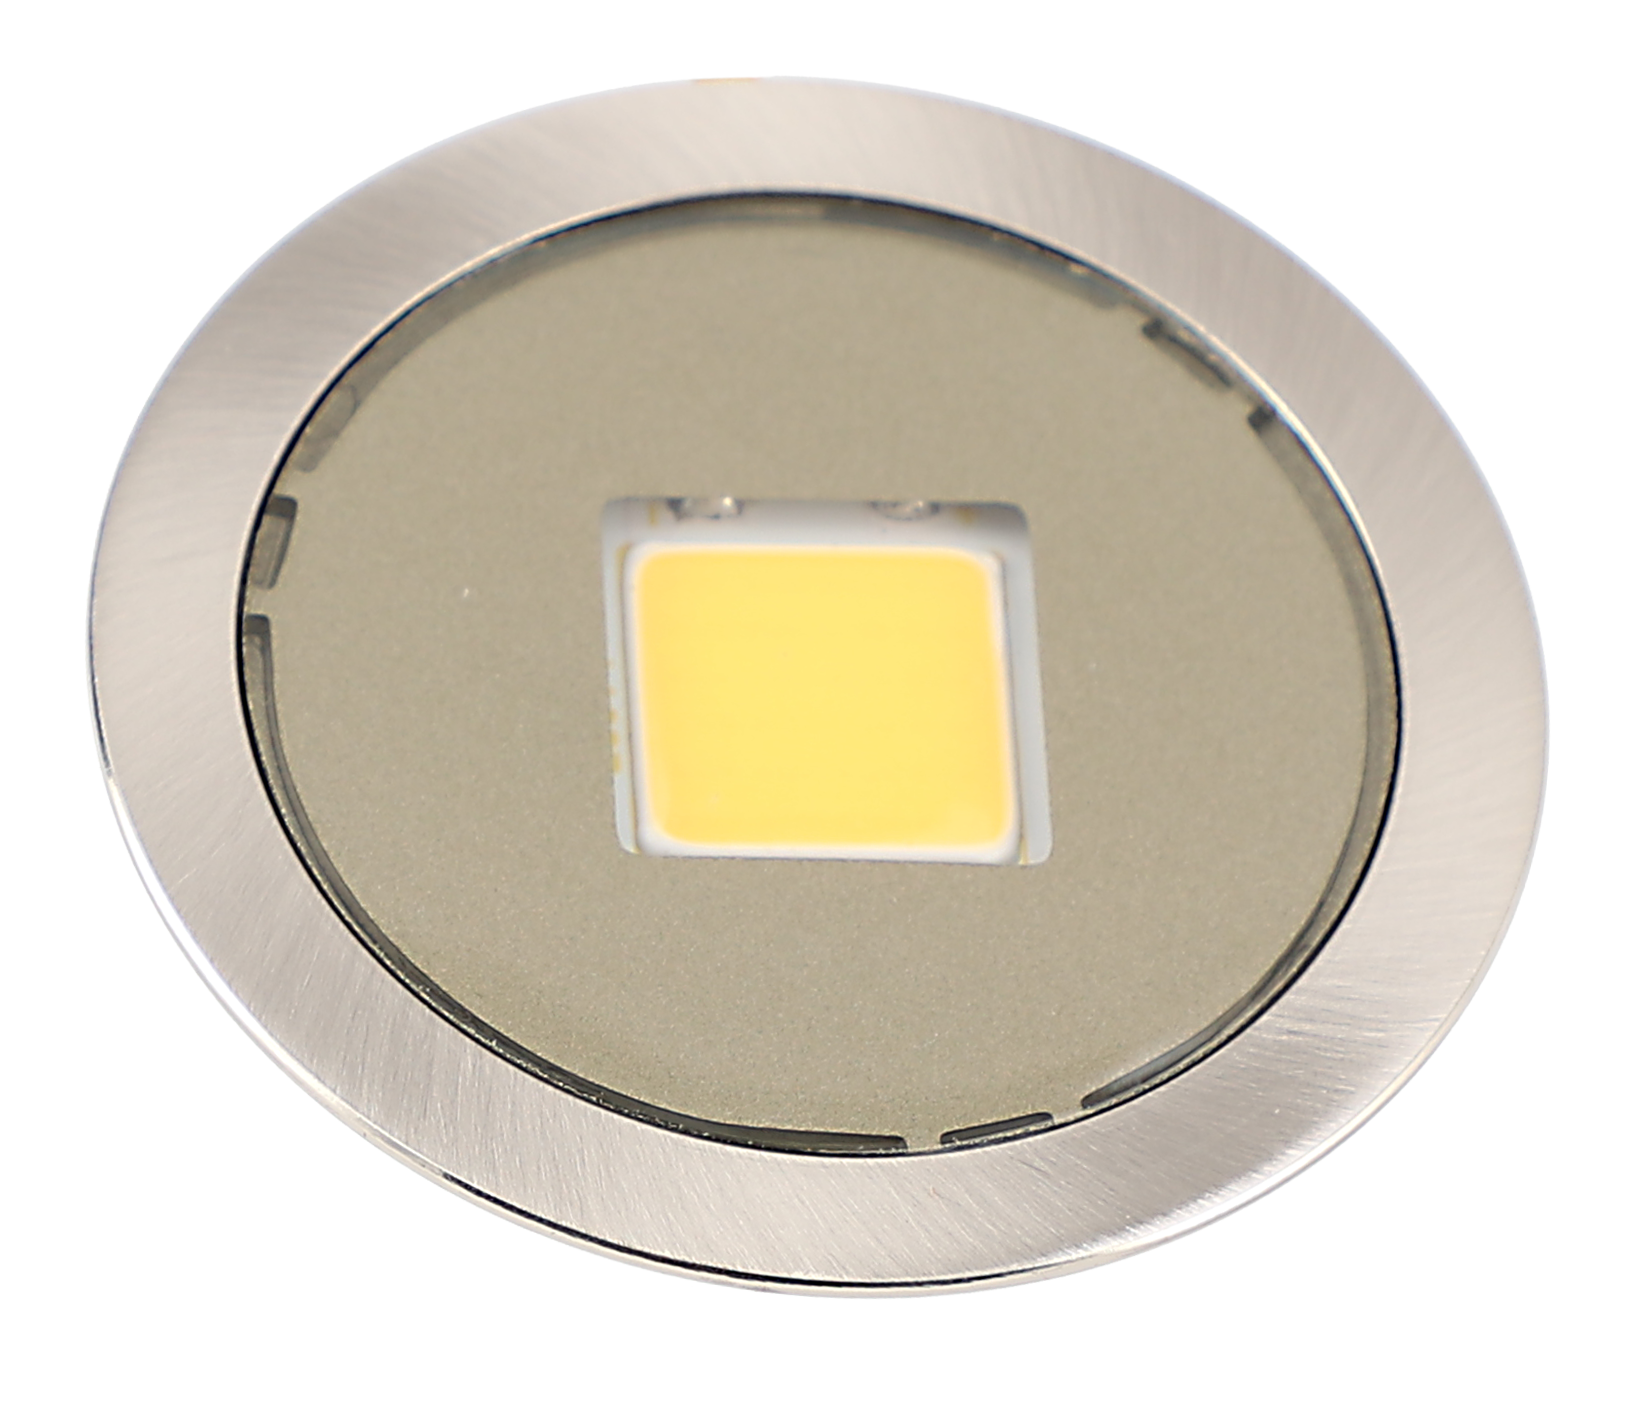 Xerolight LED Downlight Slimline 9997 3W 350mA 240lm BS-K